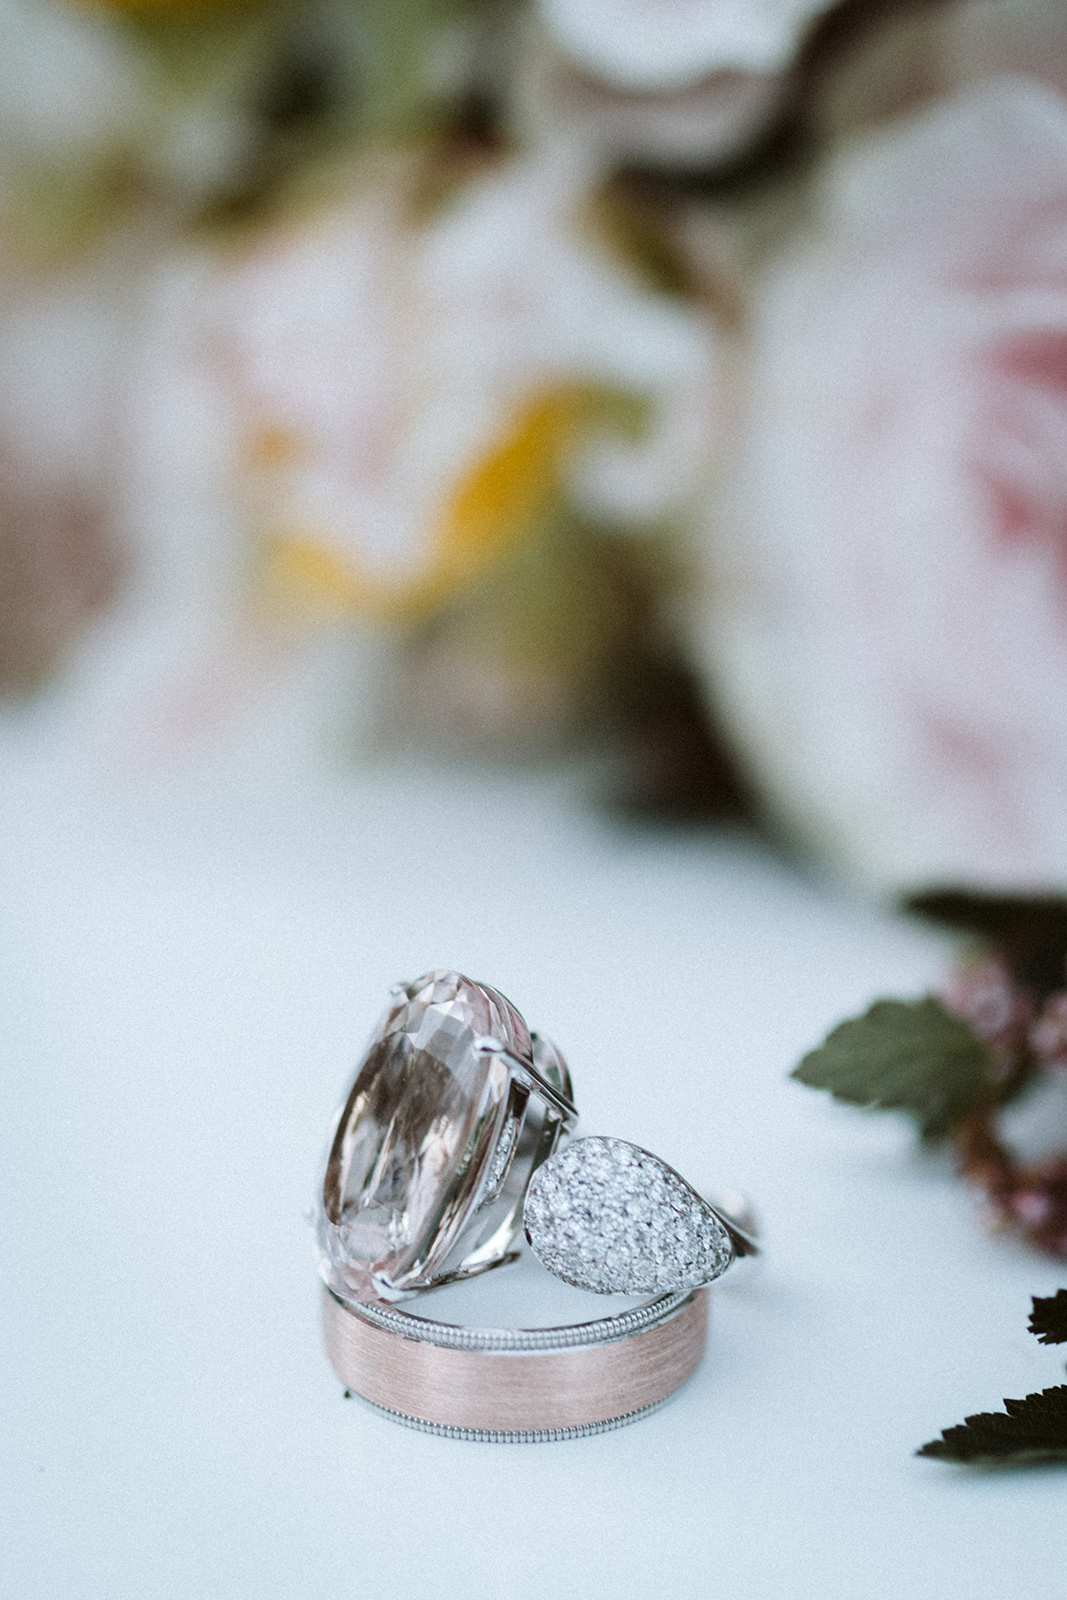 Romantic Rose Engagement Ring Chicago Wedding lisa kathan photography